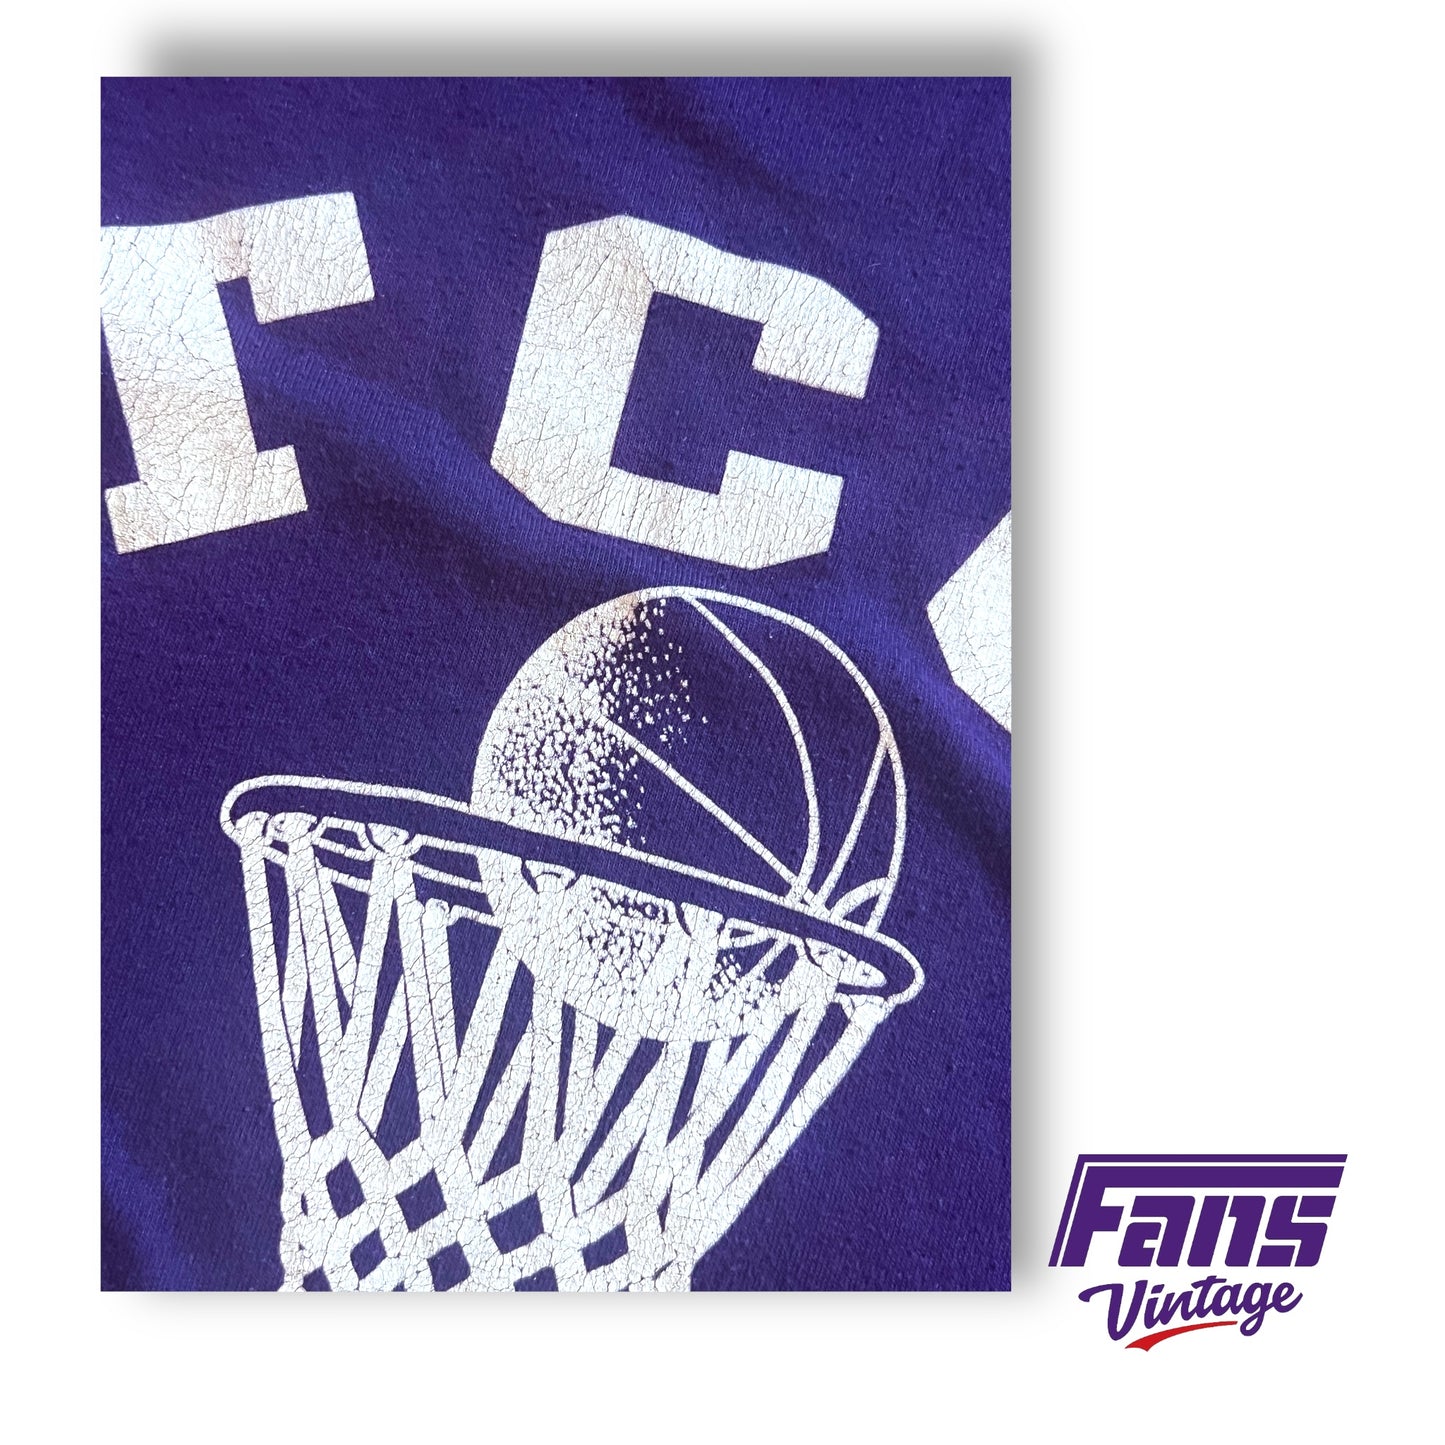 Vintage 90s TCU Basketball Converse Kids T-Shirt